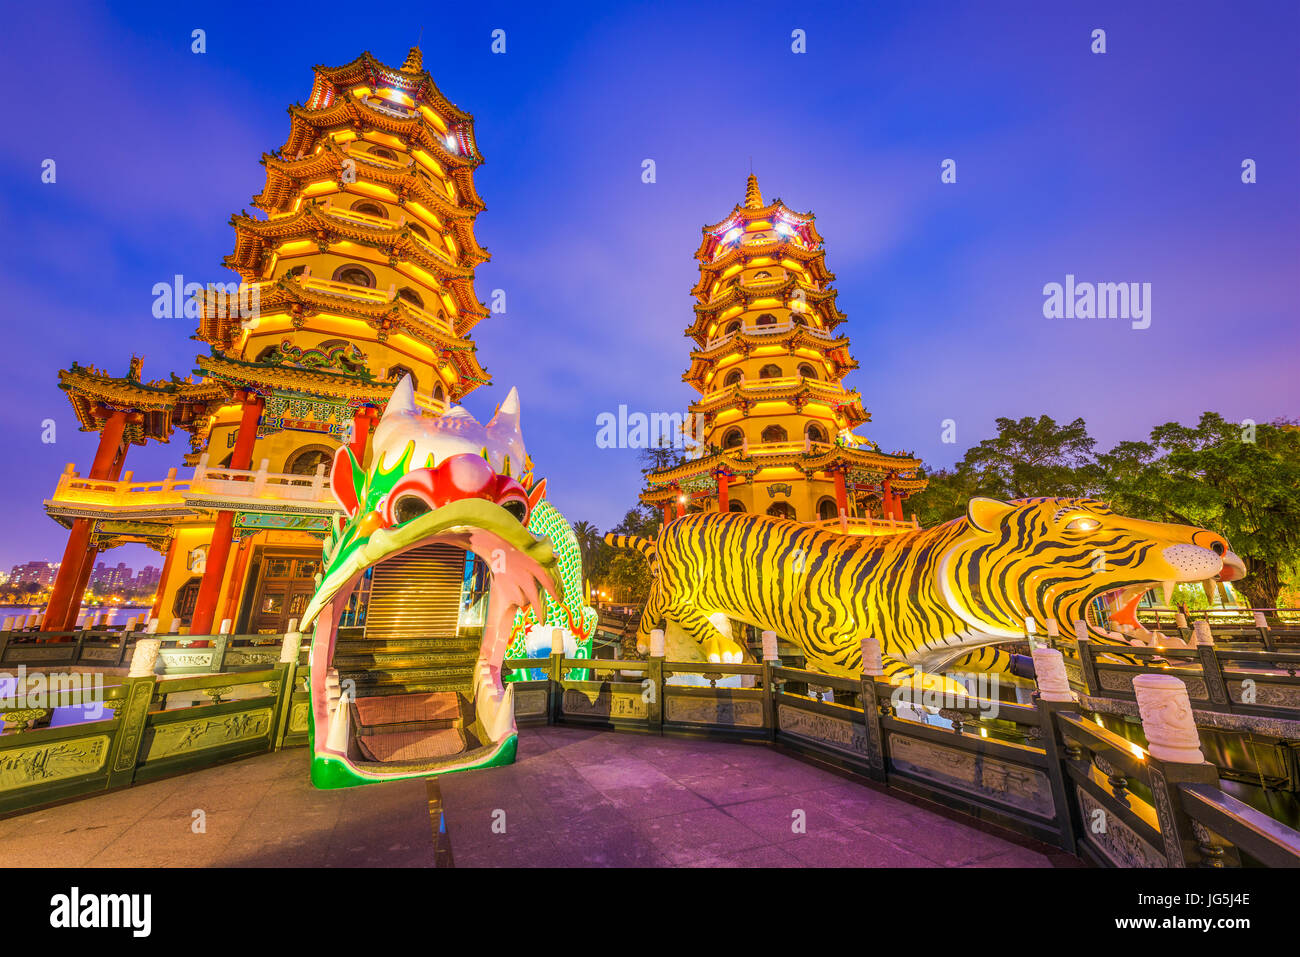 Kaohsiung, Taiwan Lotus Pond's Dragon and Tiger Pagodas at night. Stock Photo